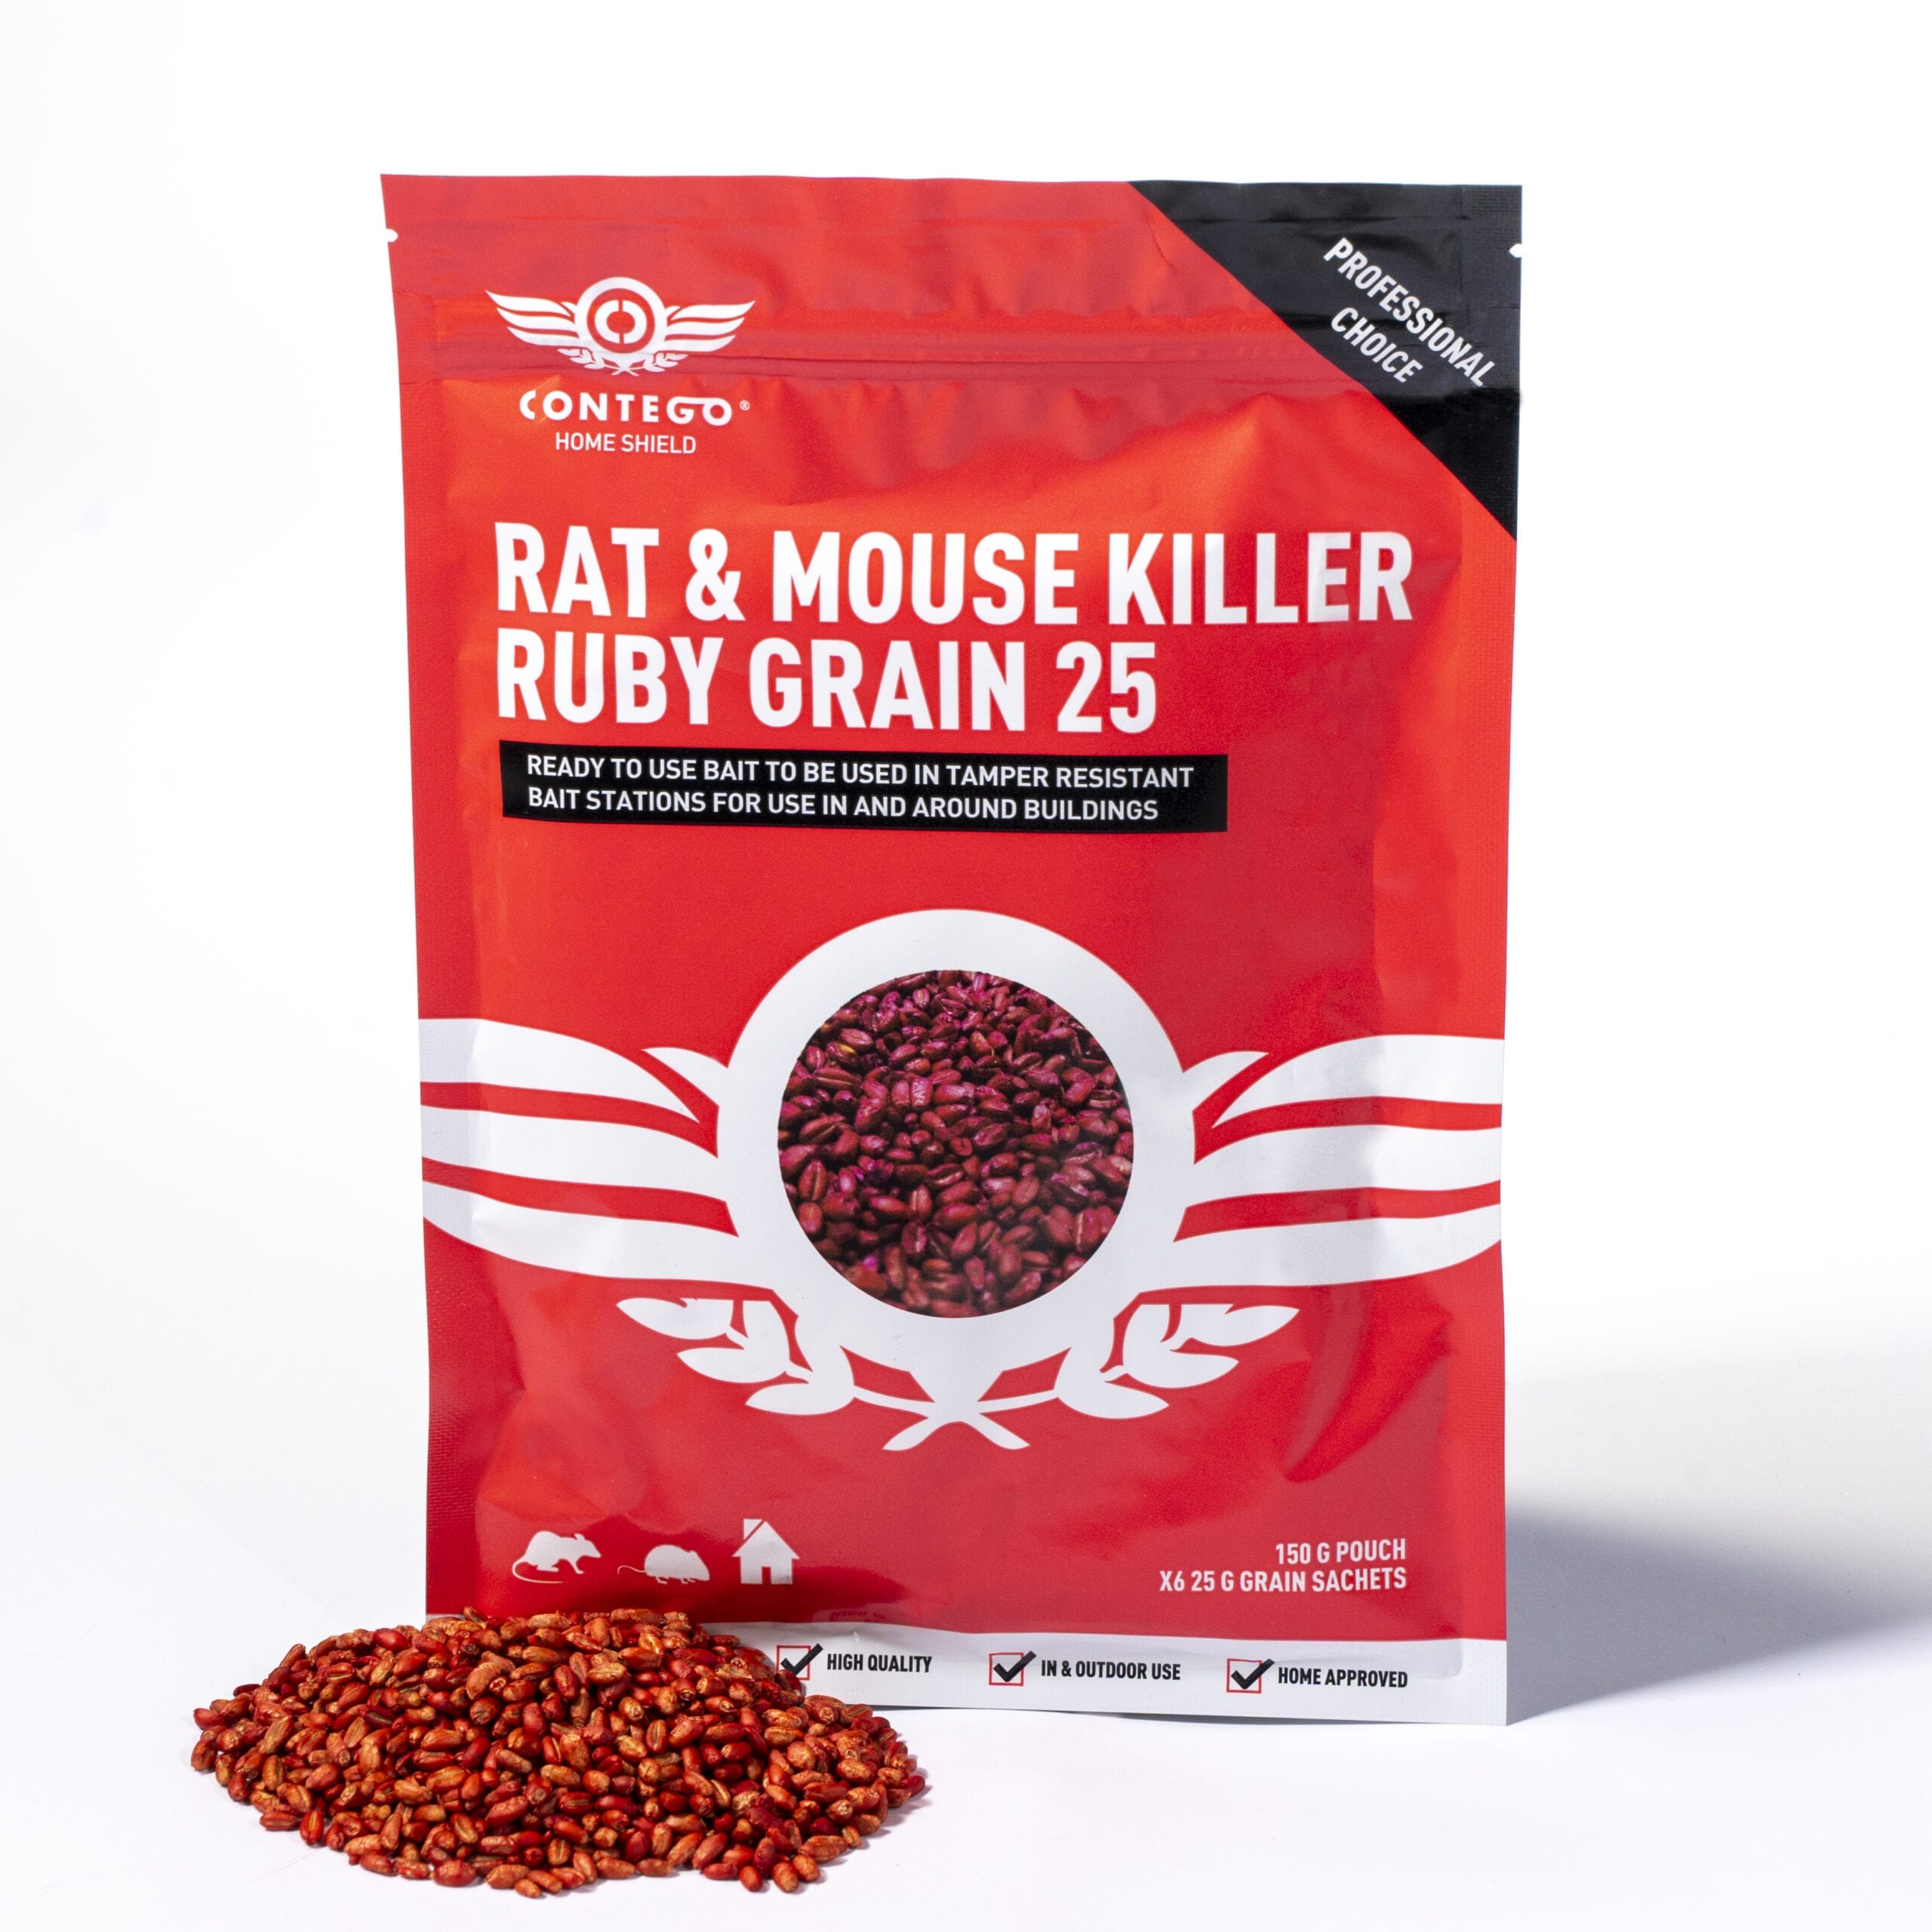 2.kg Roshield Whole Wheat Bait Sachets - Rat & Mouse Killer